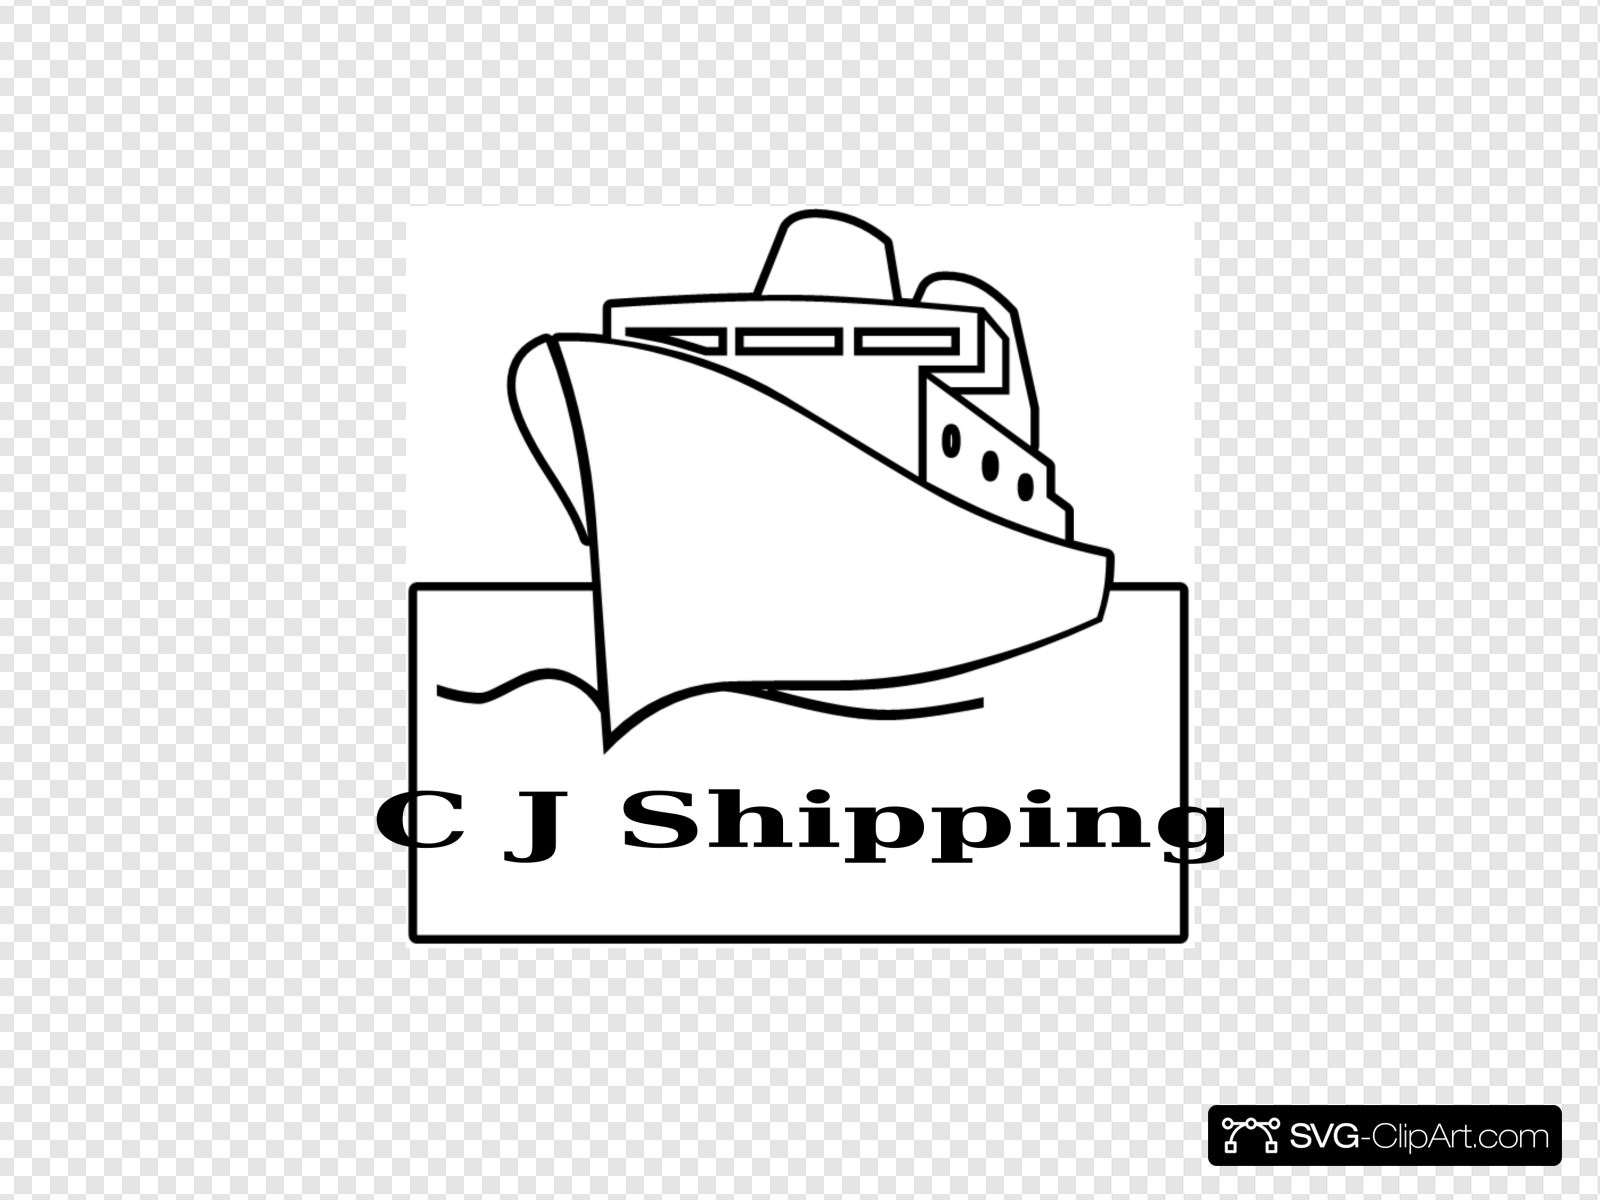 Cj Shipping Clip art, Icon and SVG.